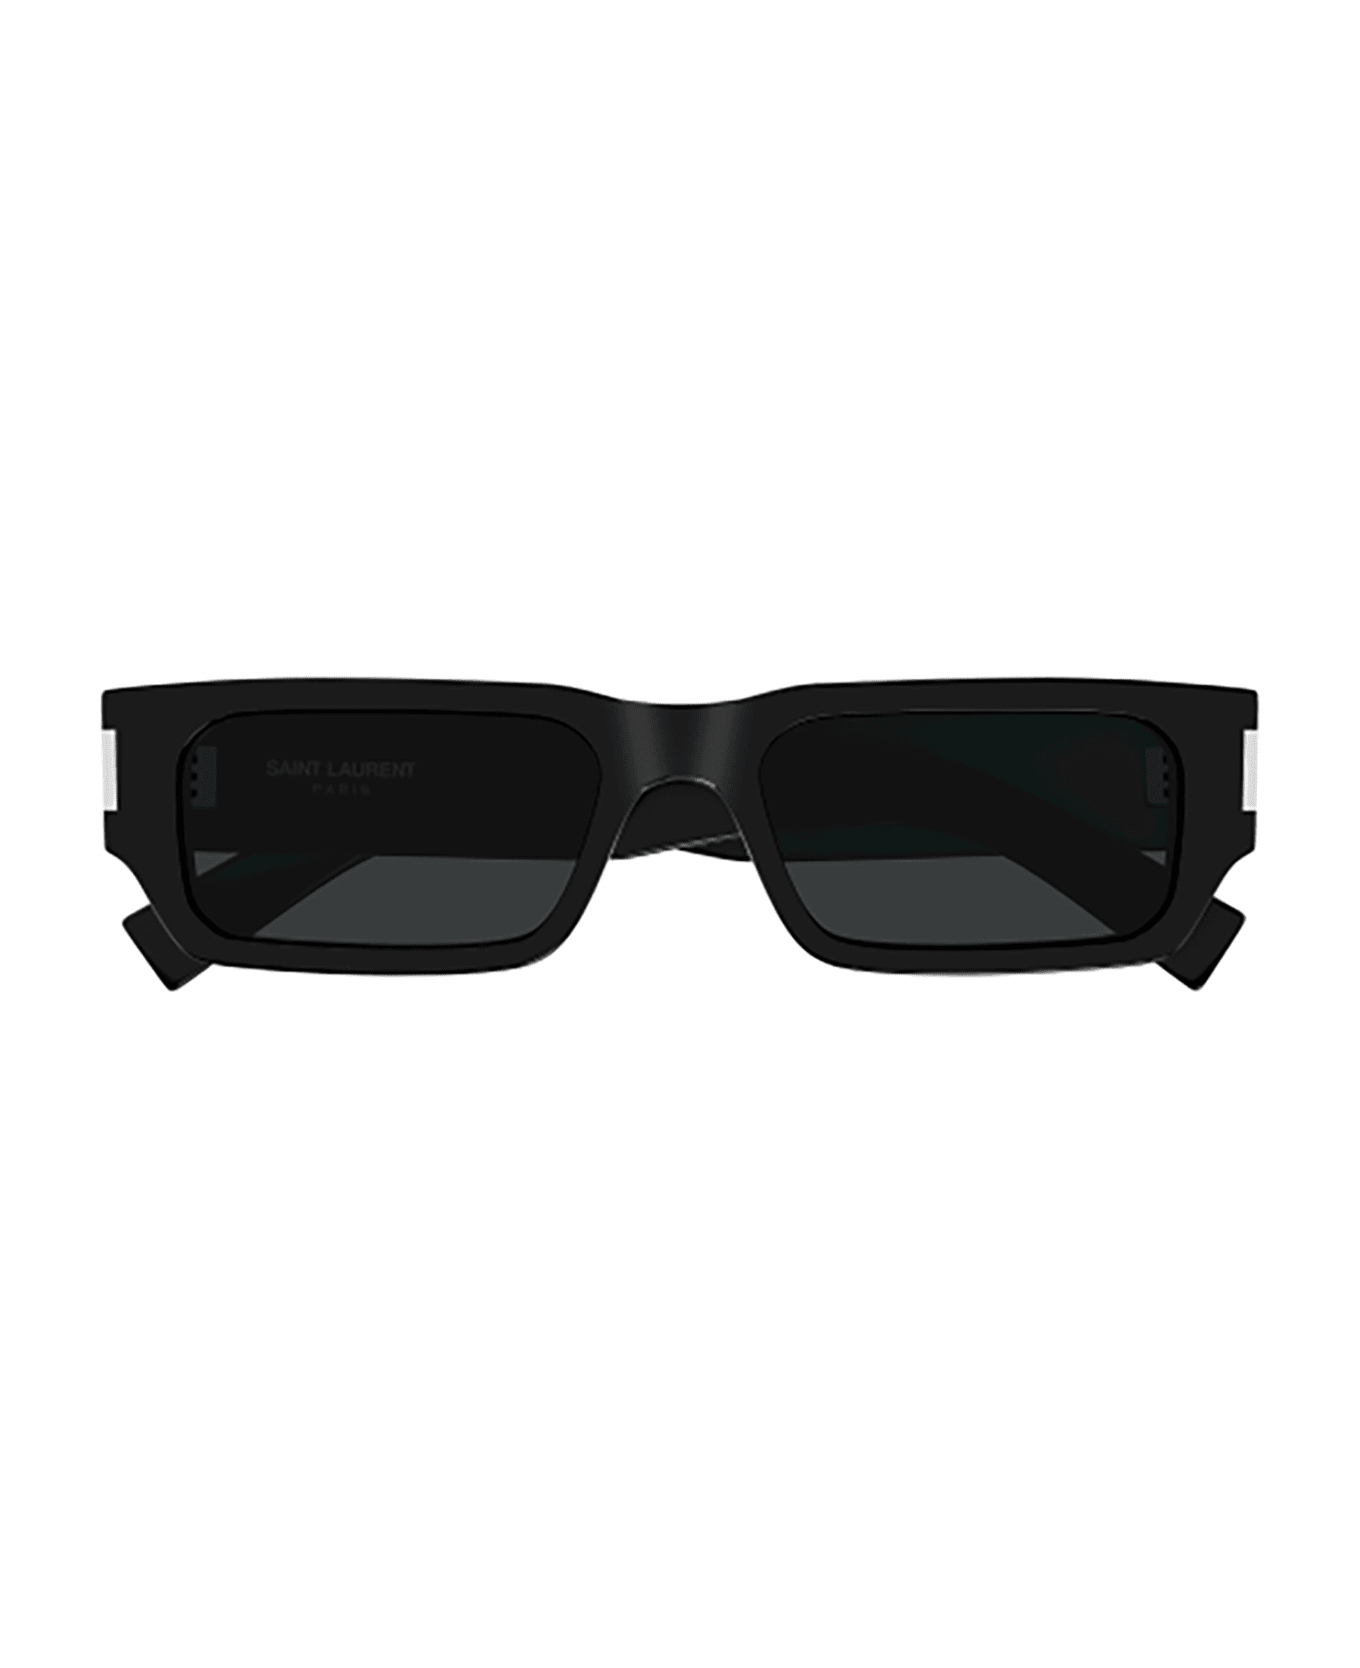 Saint Laurent Eyewear Sl 660 Sunglasses - 001 Sunglasses GG0962S 005